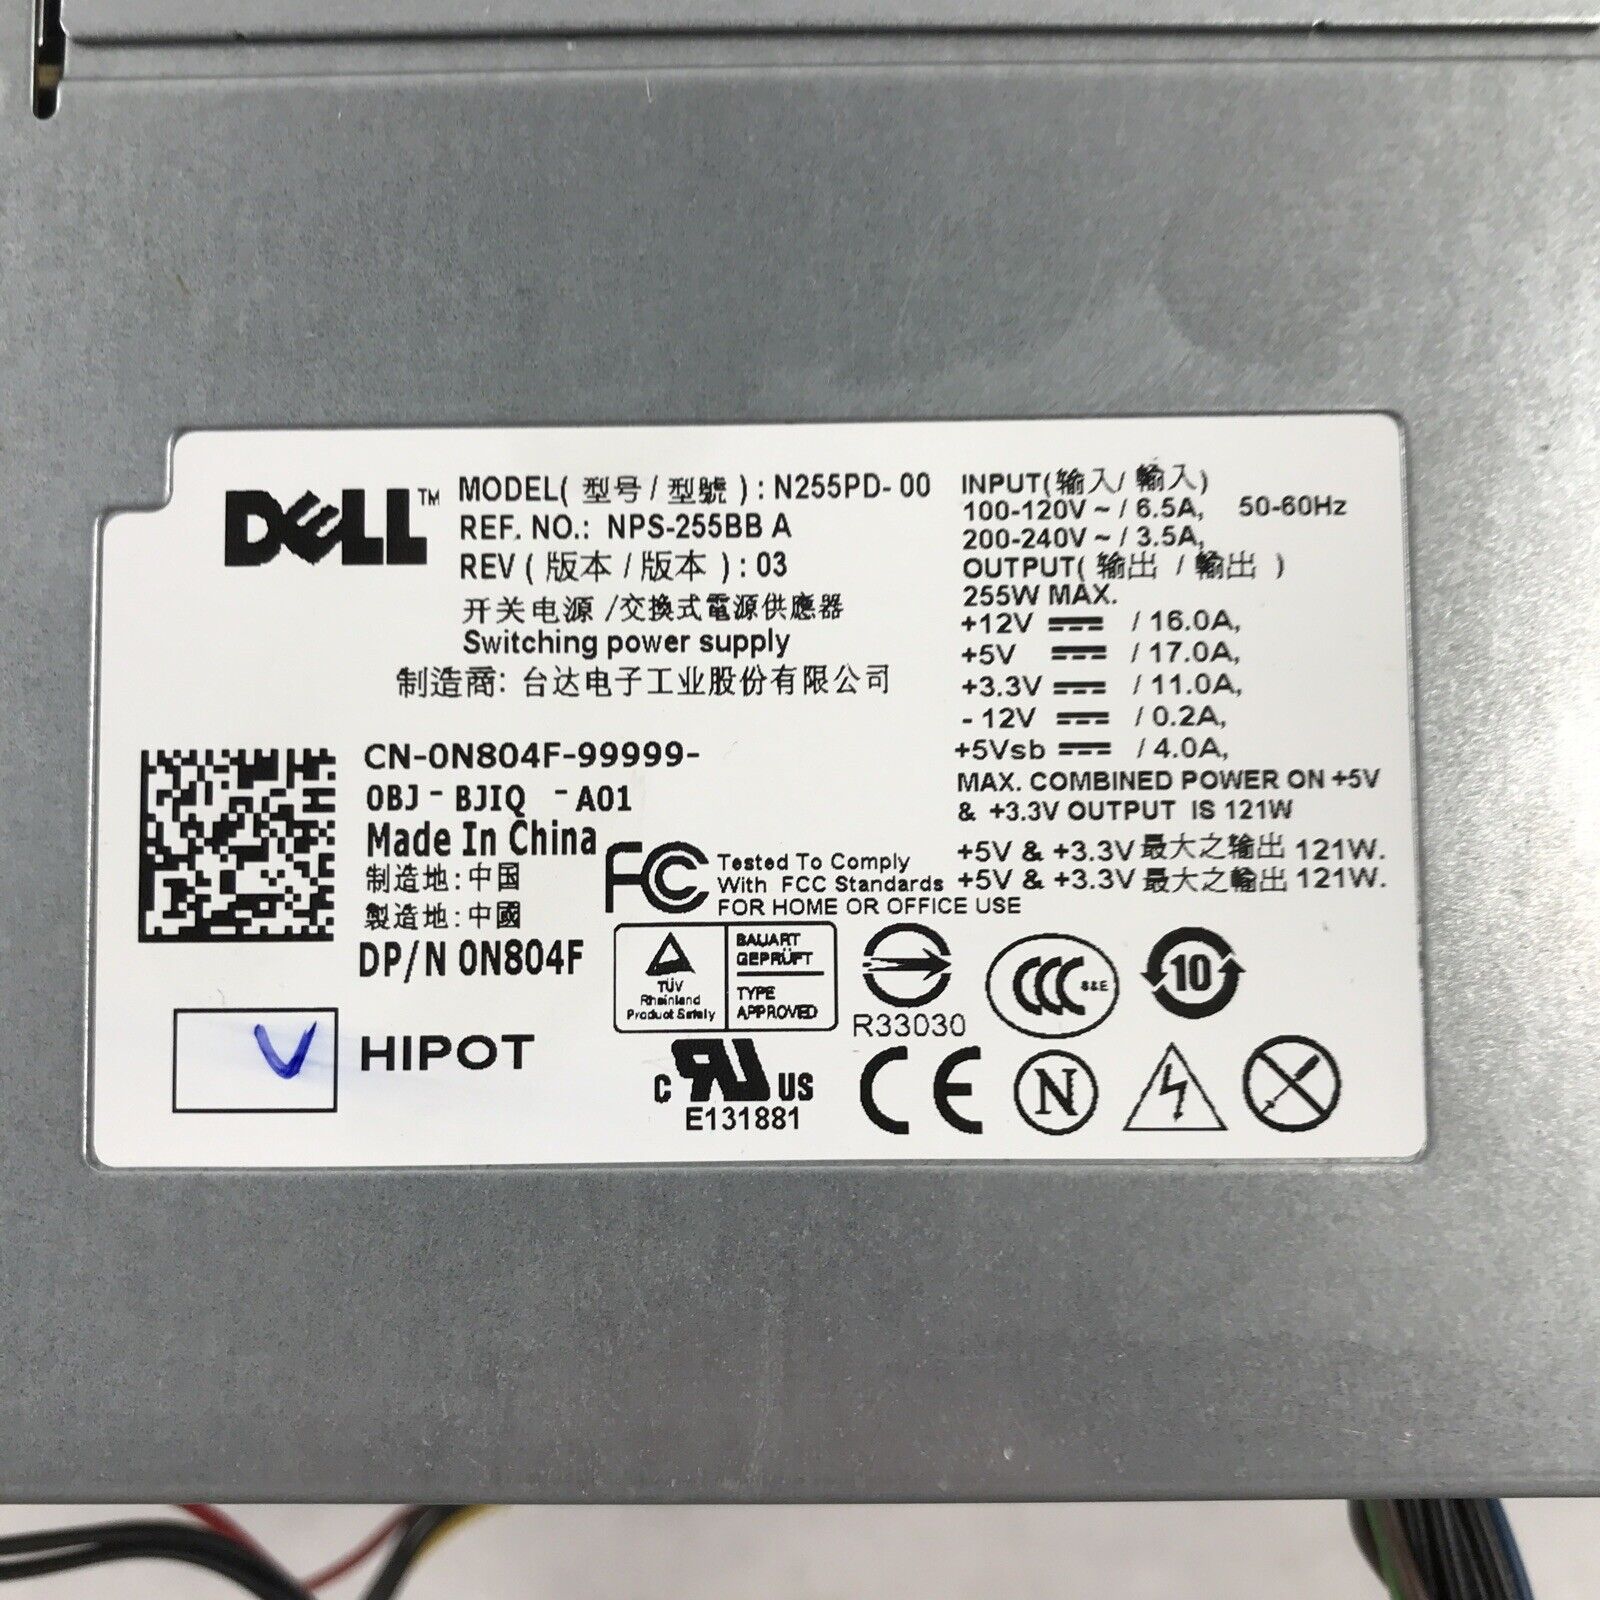 Dell N804F 255W Switching Power Supply N255PD-00 240V 6.5A 60Hz 0N804F